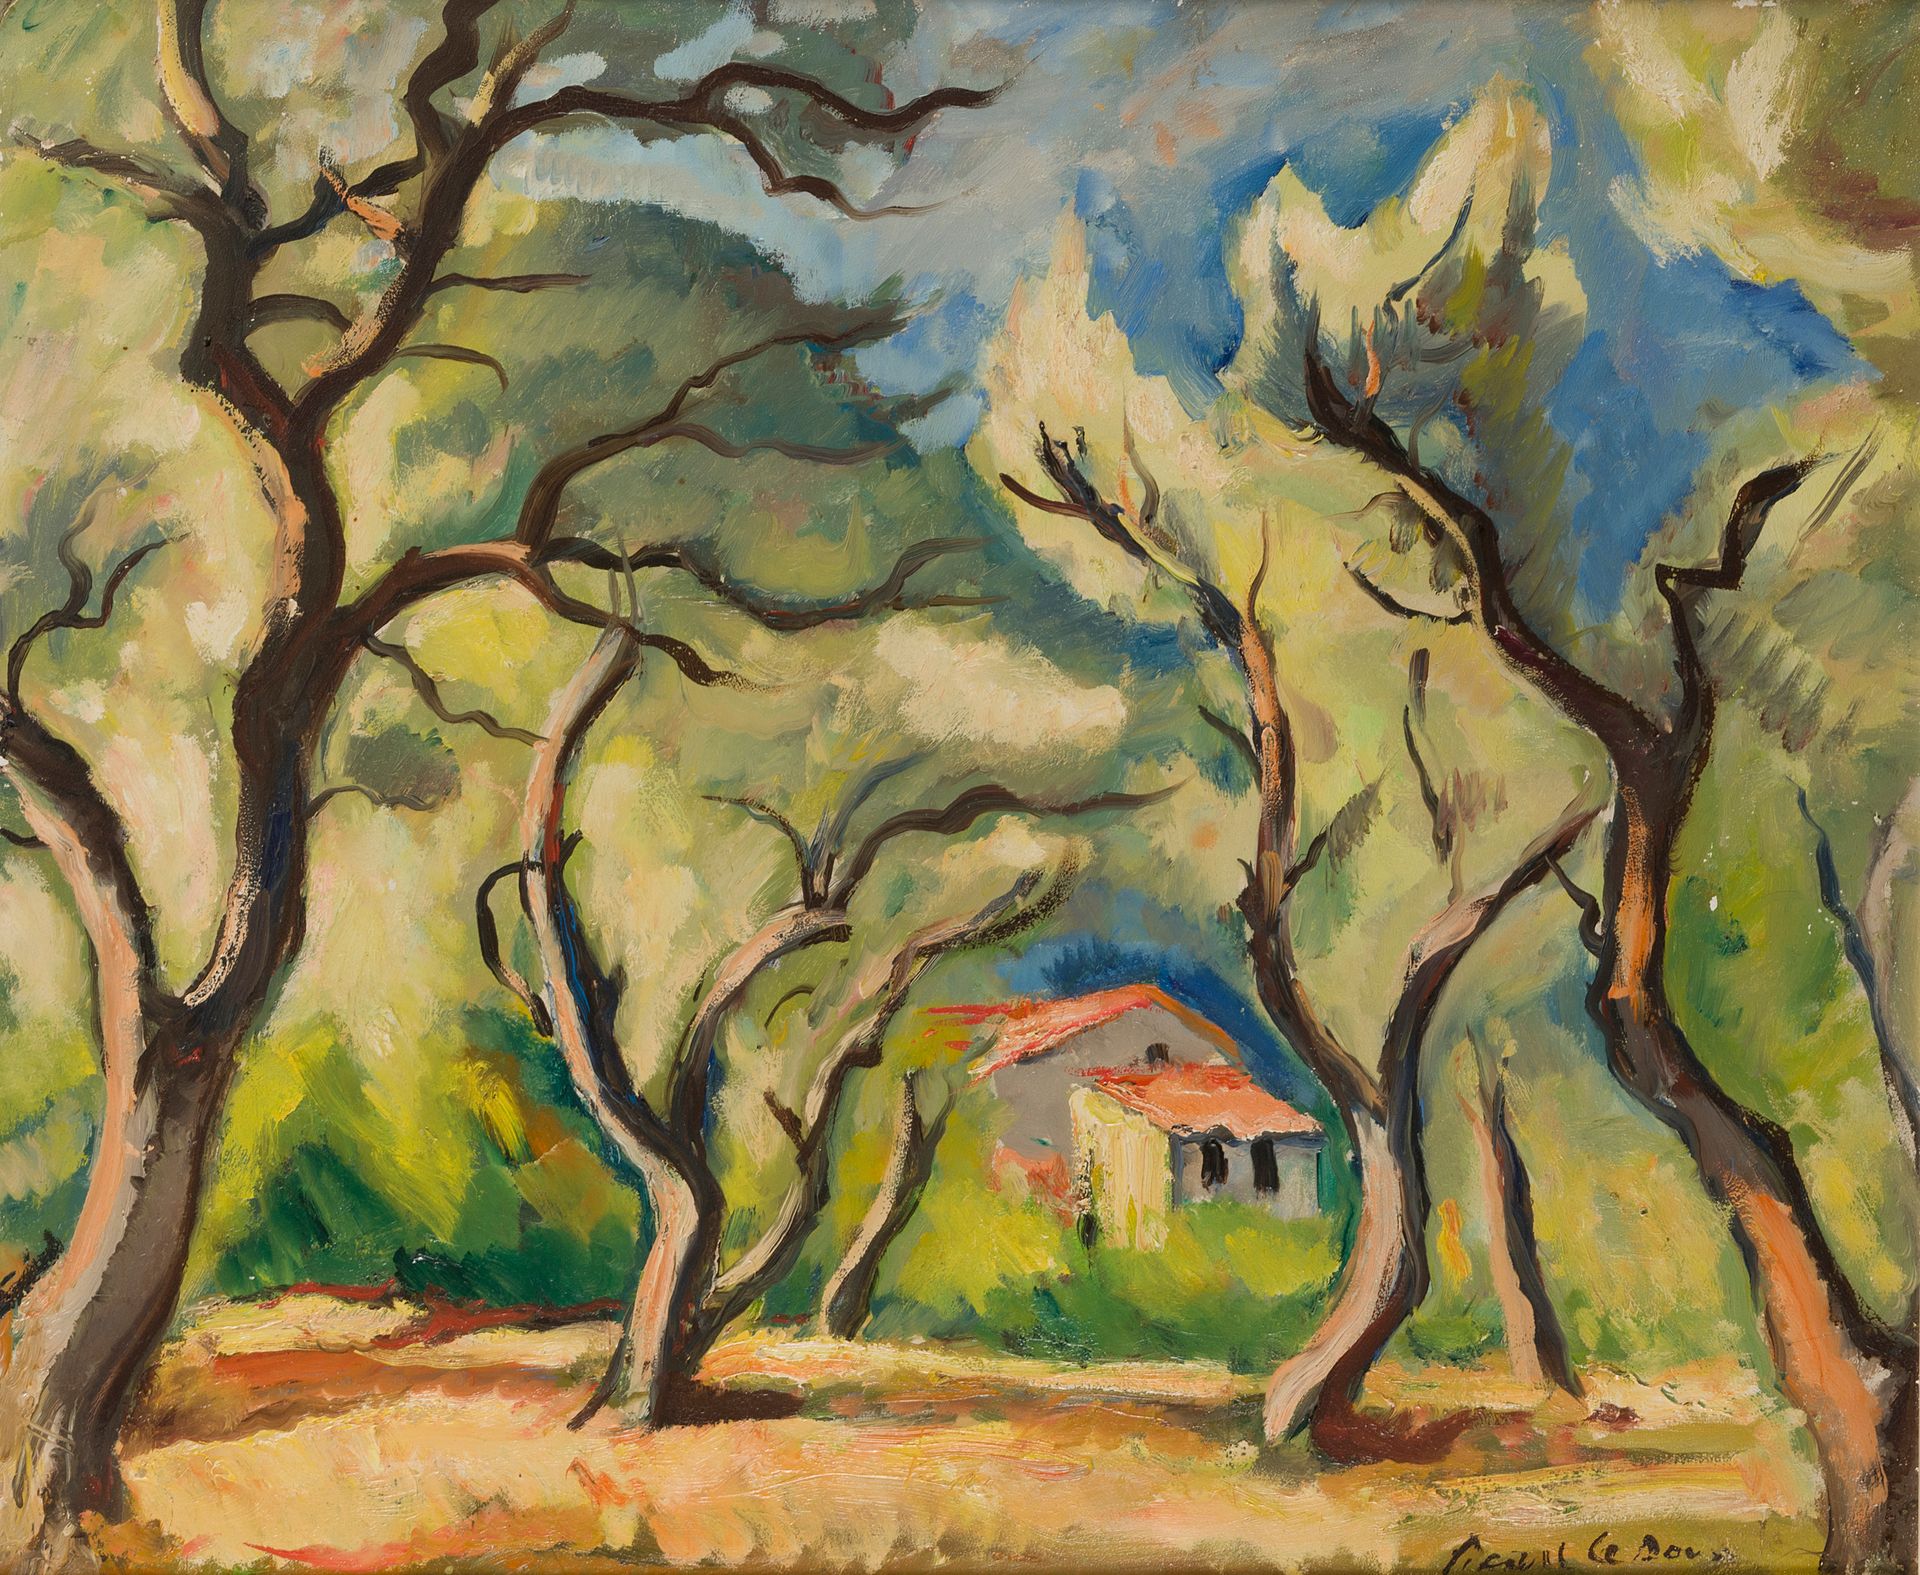 Null 查尔斯-皮卡特-勒杜(1881-1959)
橄榄树
右下角有签名的伊索尔油彩
60 x 73 cm

注:
在大皇宫春季沙龙上展出